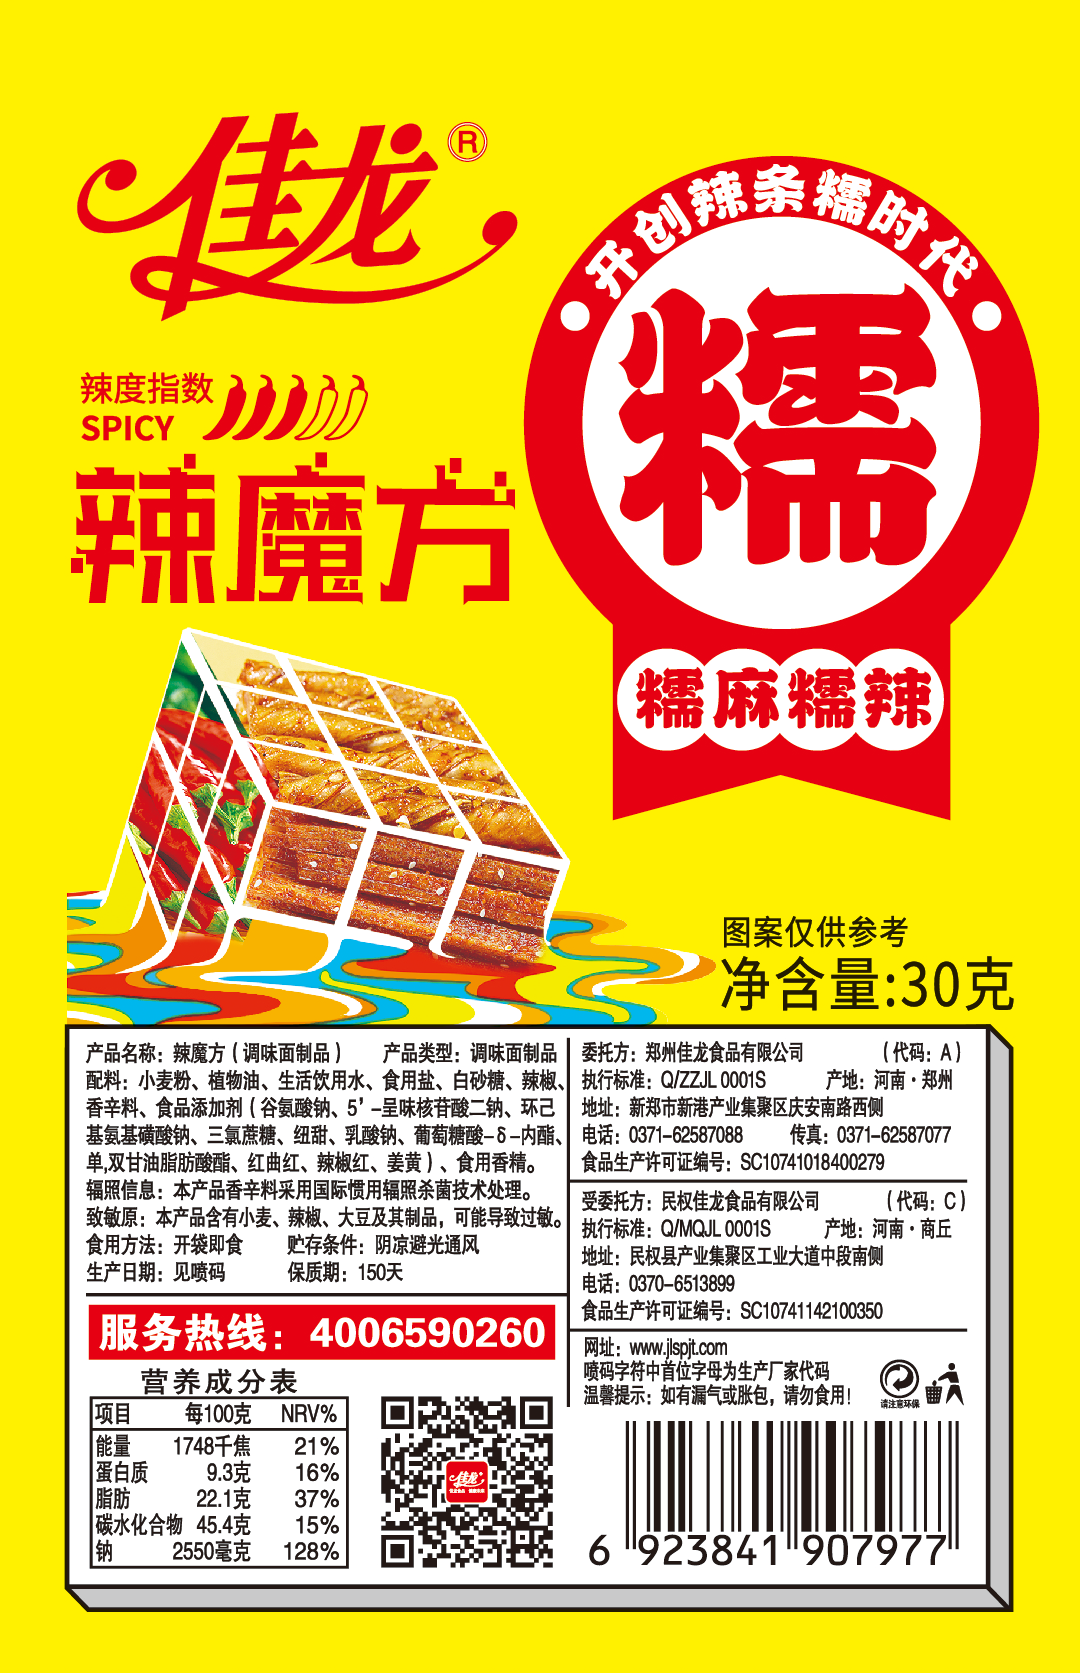 30g Spicy Rubik's Cube